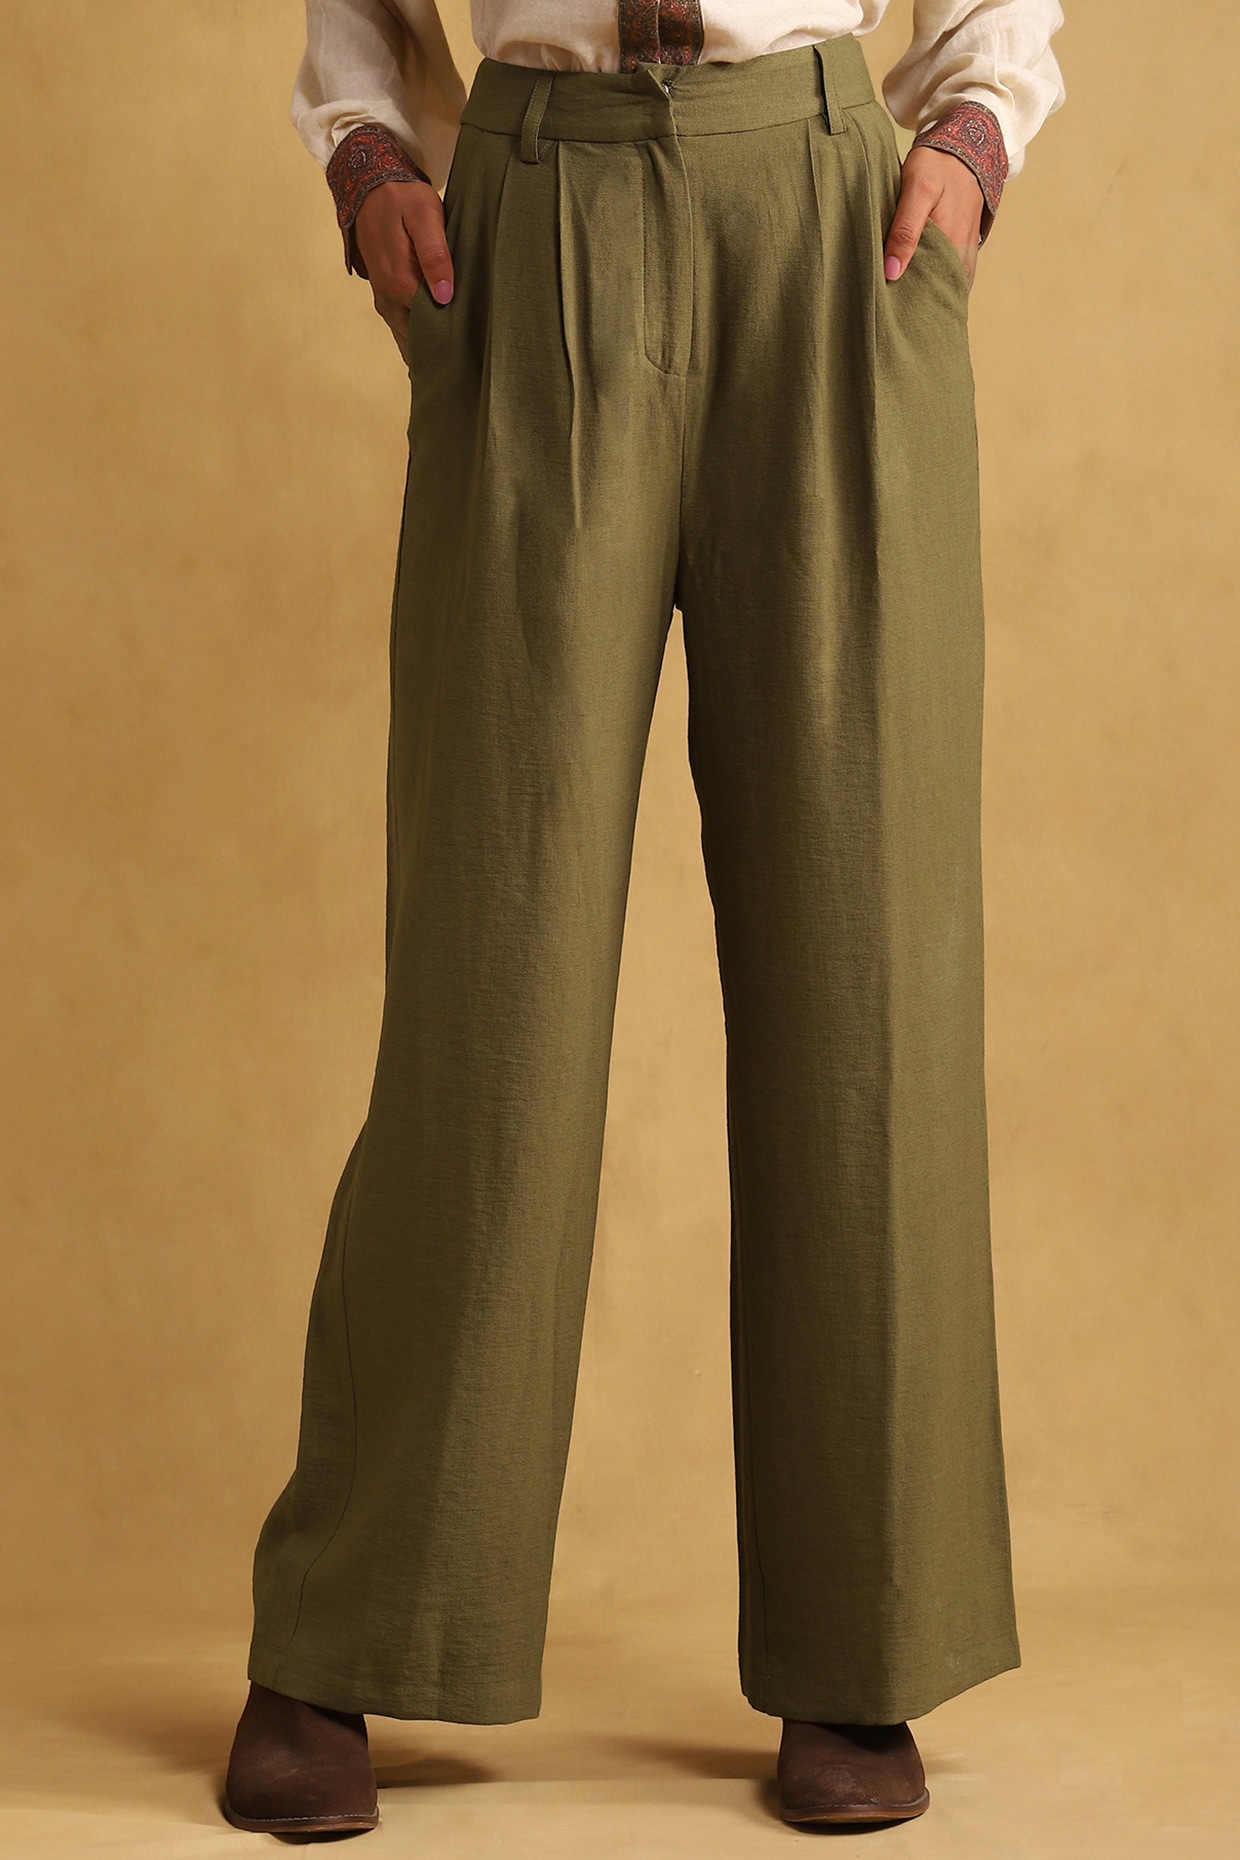 FEWQ Vintage Men's Flared Jeans Hem Ripped Male High Street Y2k Denim  Trousers Solid Olor Pants Wide Leg Summer Tide New 24B2441 - AliExpress